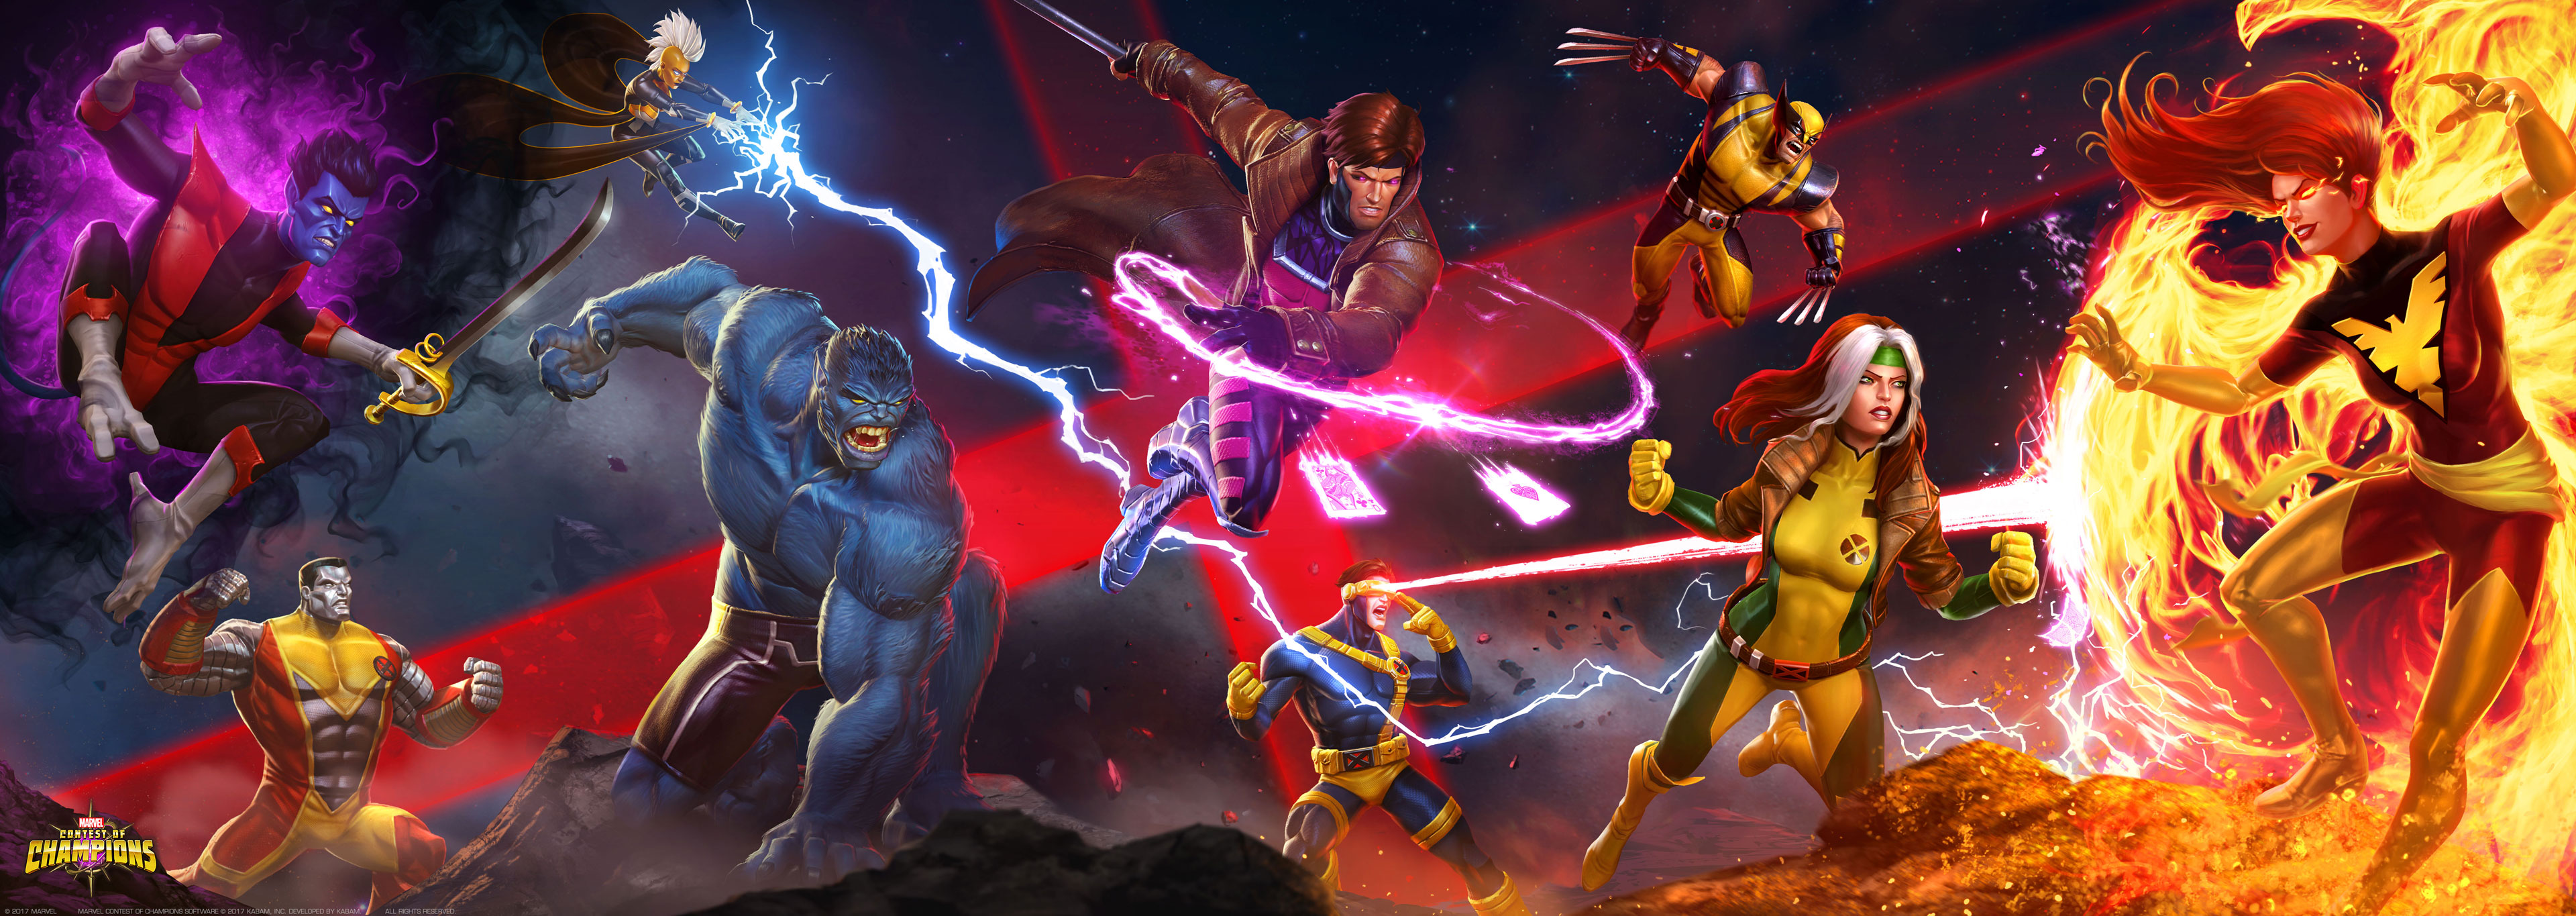 video game, marvel contest of champions, beast (marvel comics), colossus, cyclops (marvel comics), dark phoenix, gambit (marvel comics), jean grey, nightcrawler (marvel comics), storm (marvel comics), wolverine, x men